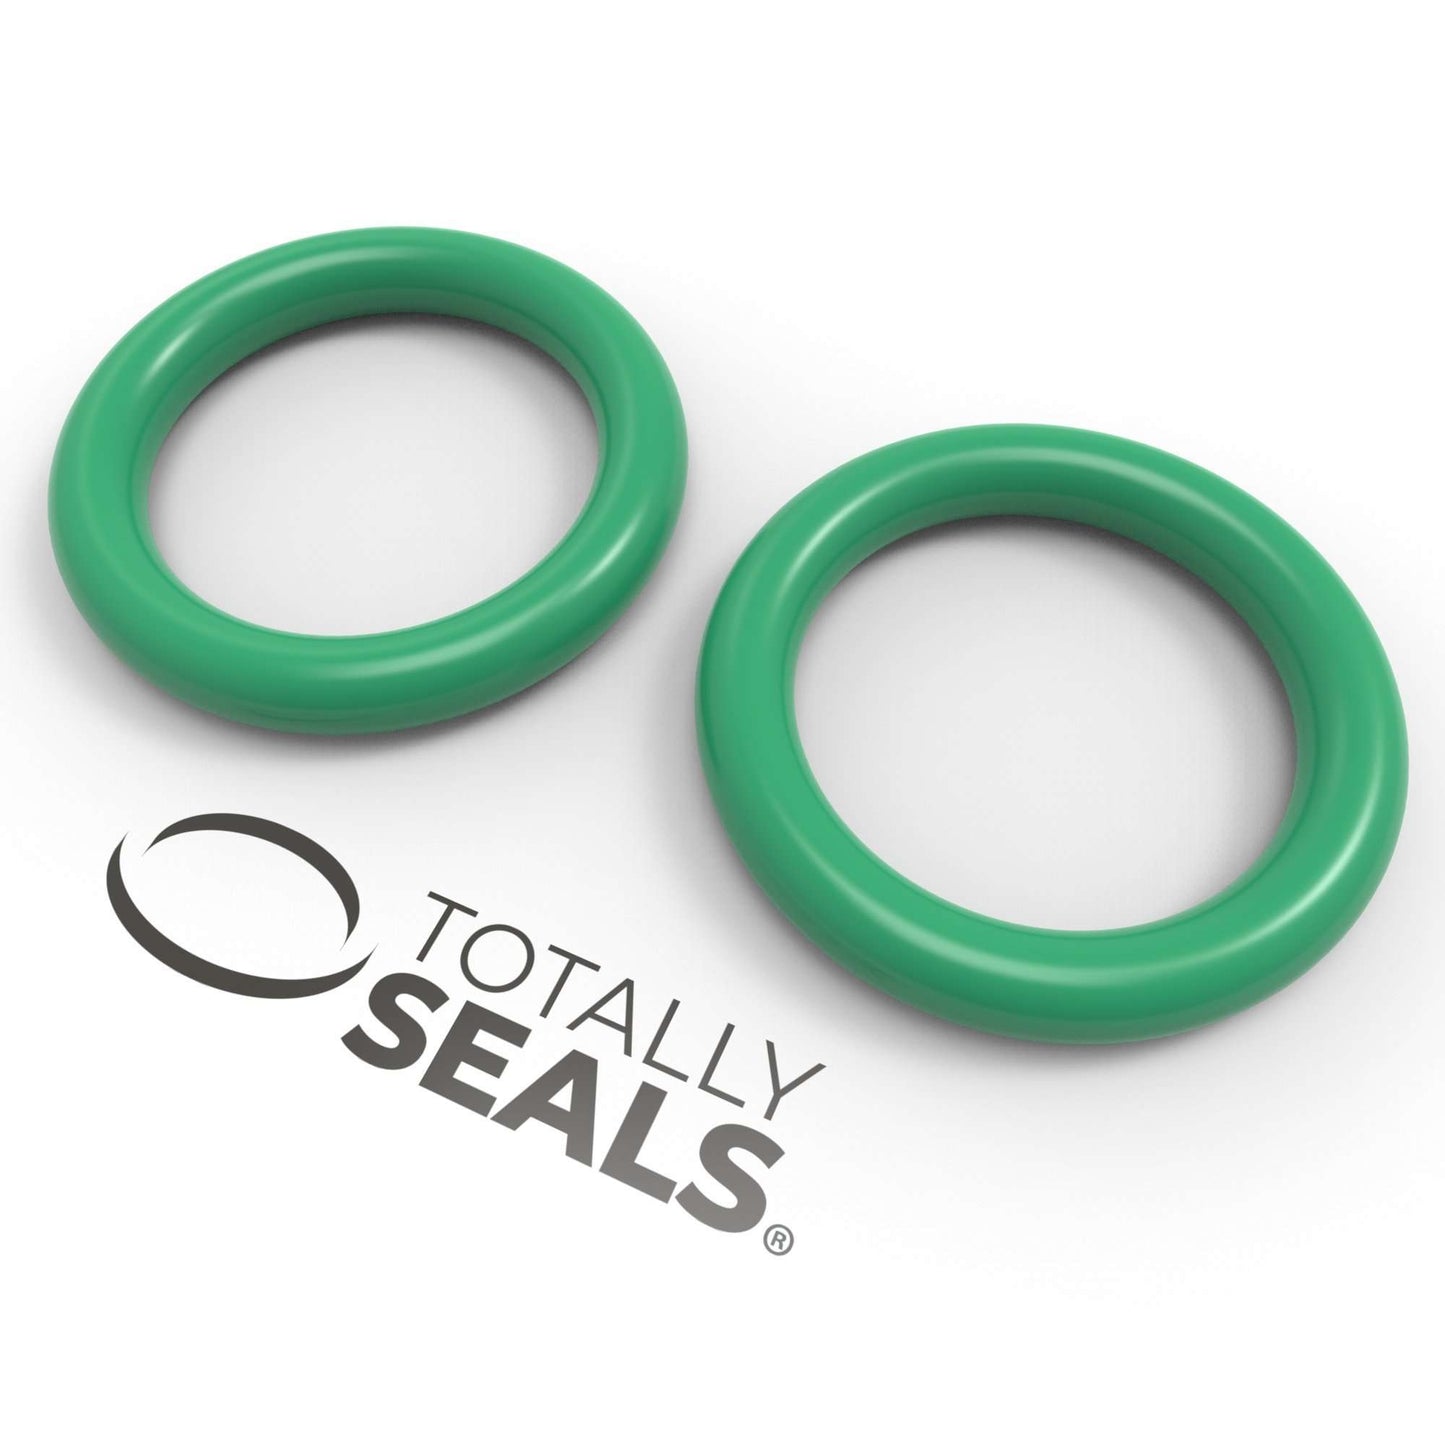 14mm x 2mm (18mm OD) FKM (Viton™) O-Rings - Totally Seals®